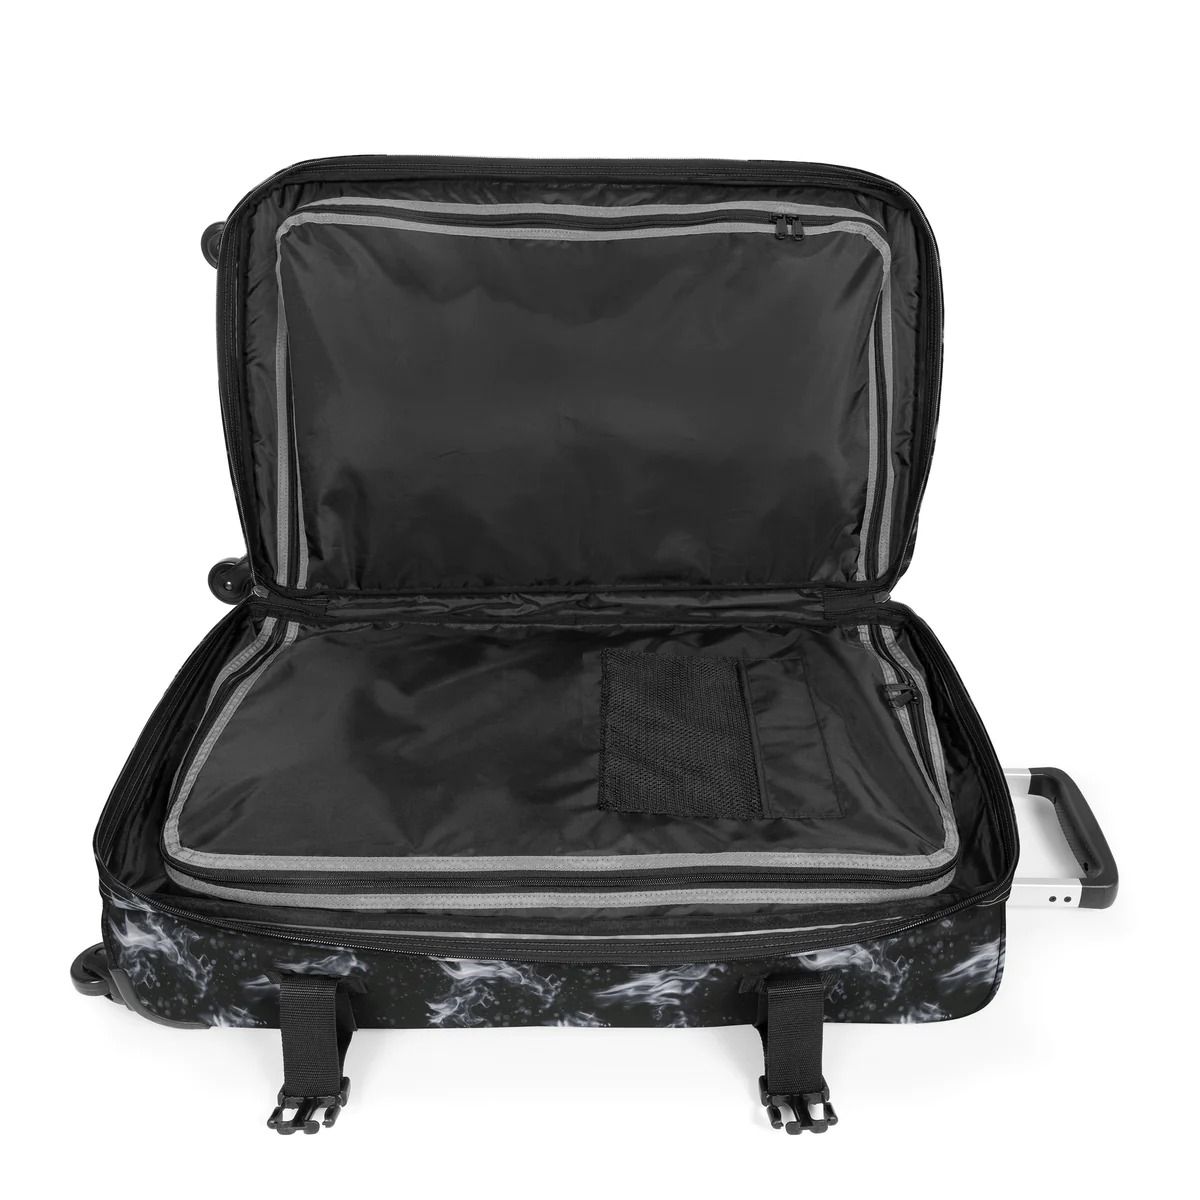 Eastpak Transit'R 4 Medium Luggage